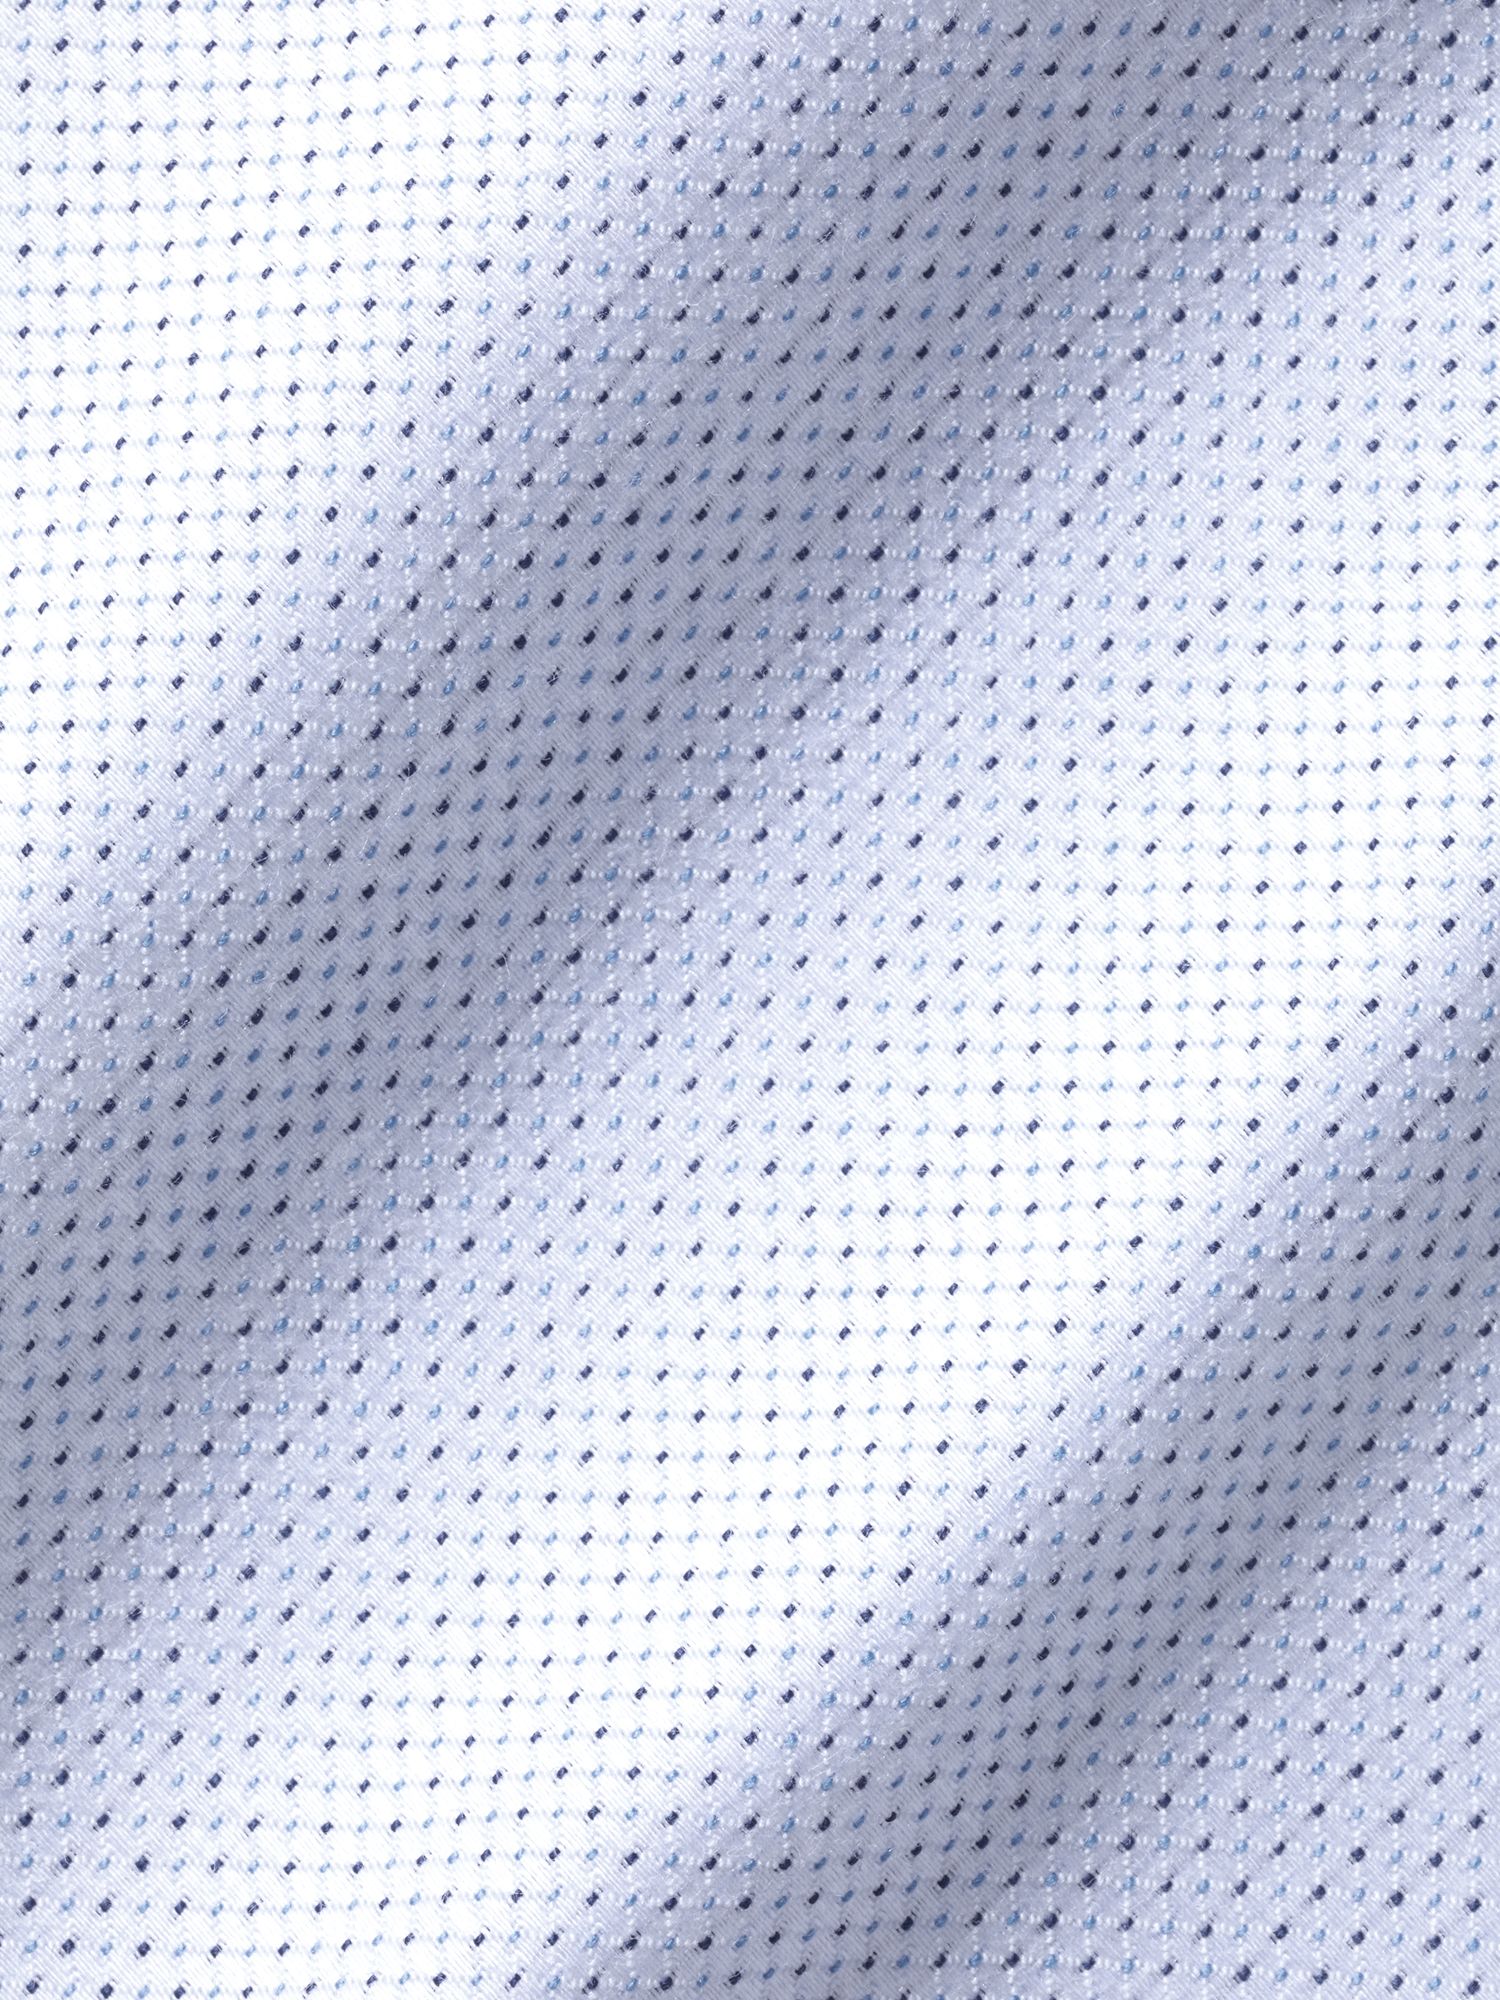 Charles Tyrwhitt Dot Stretch Texture Slim Fit Shirt, White, 16.5